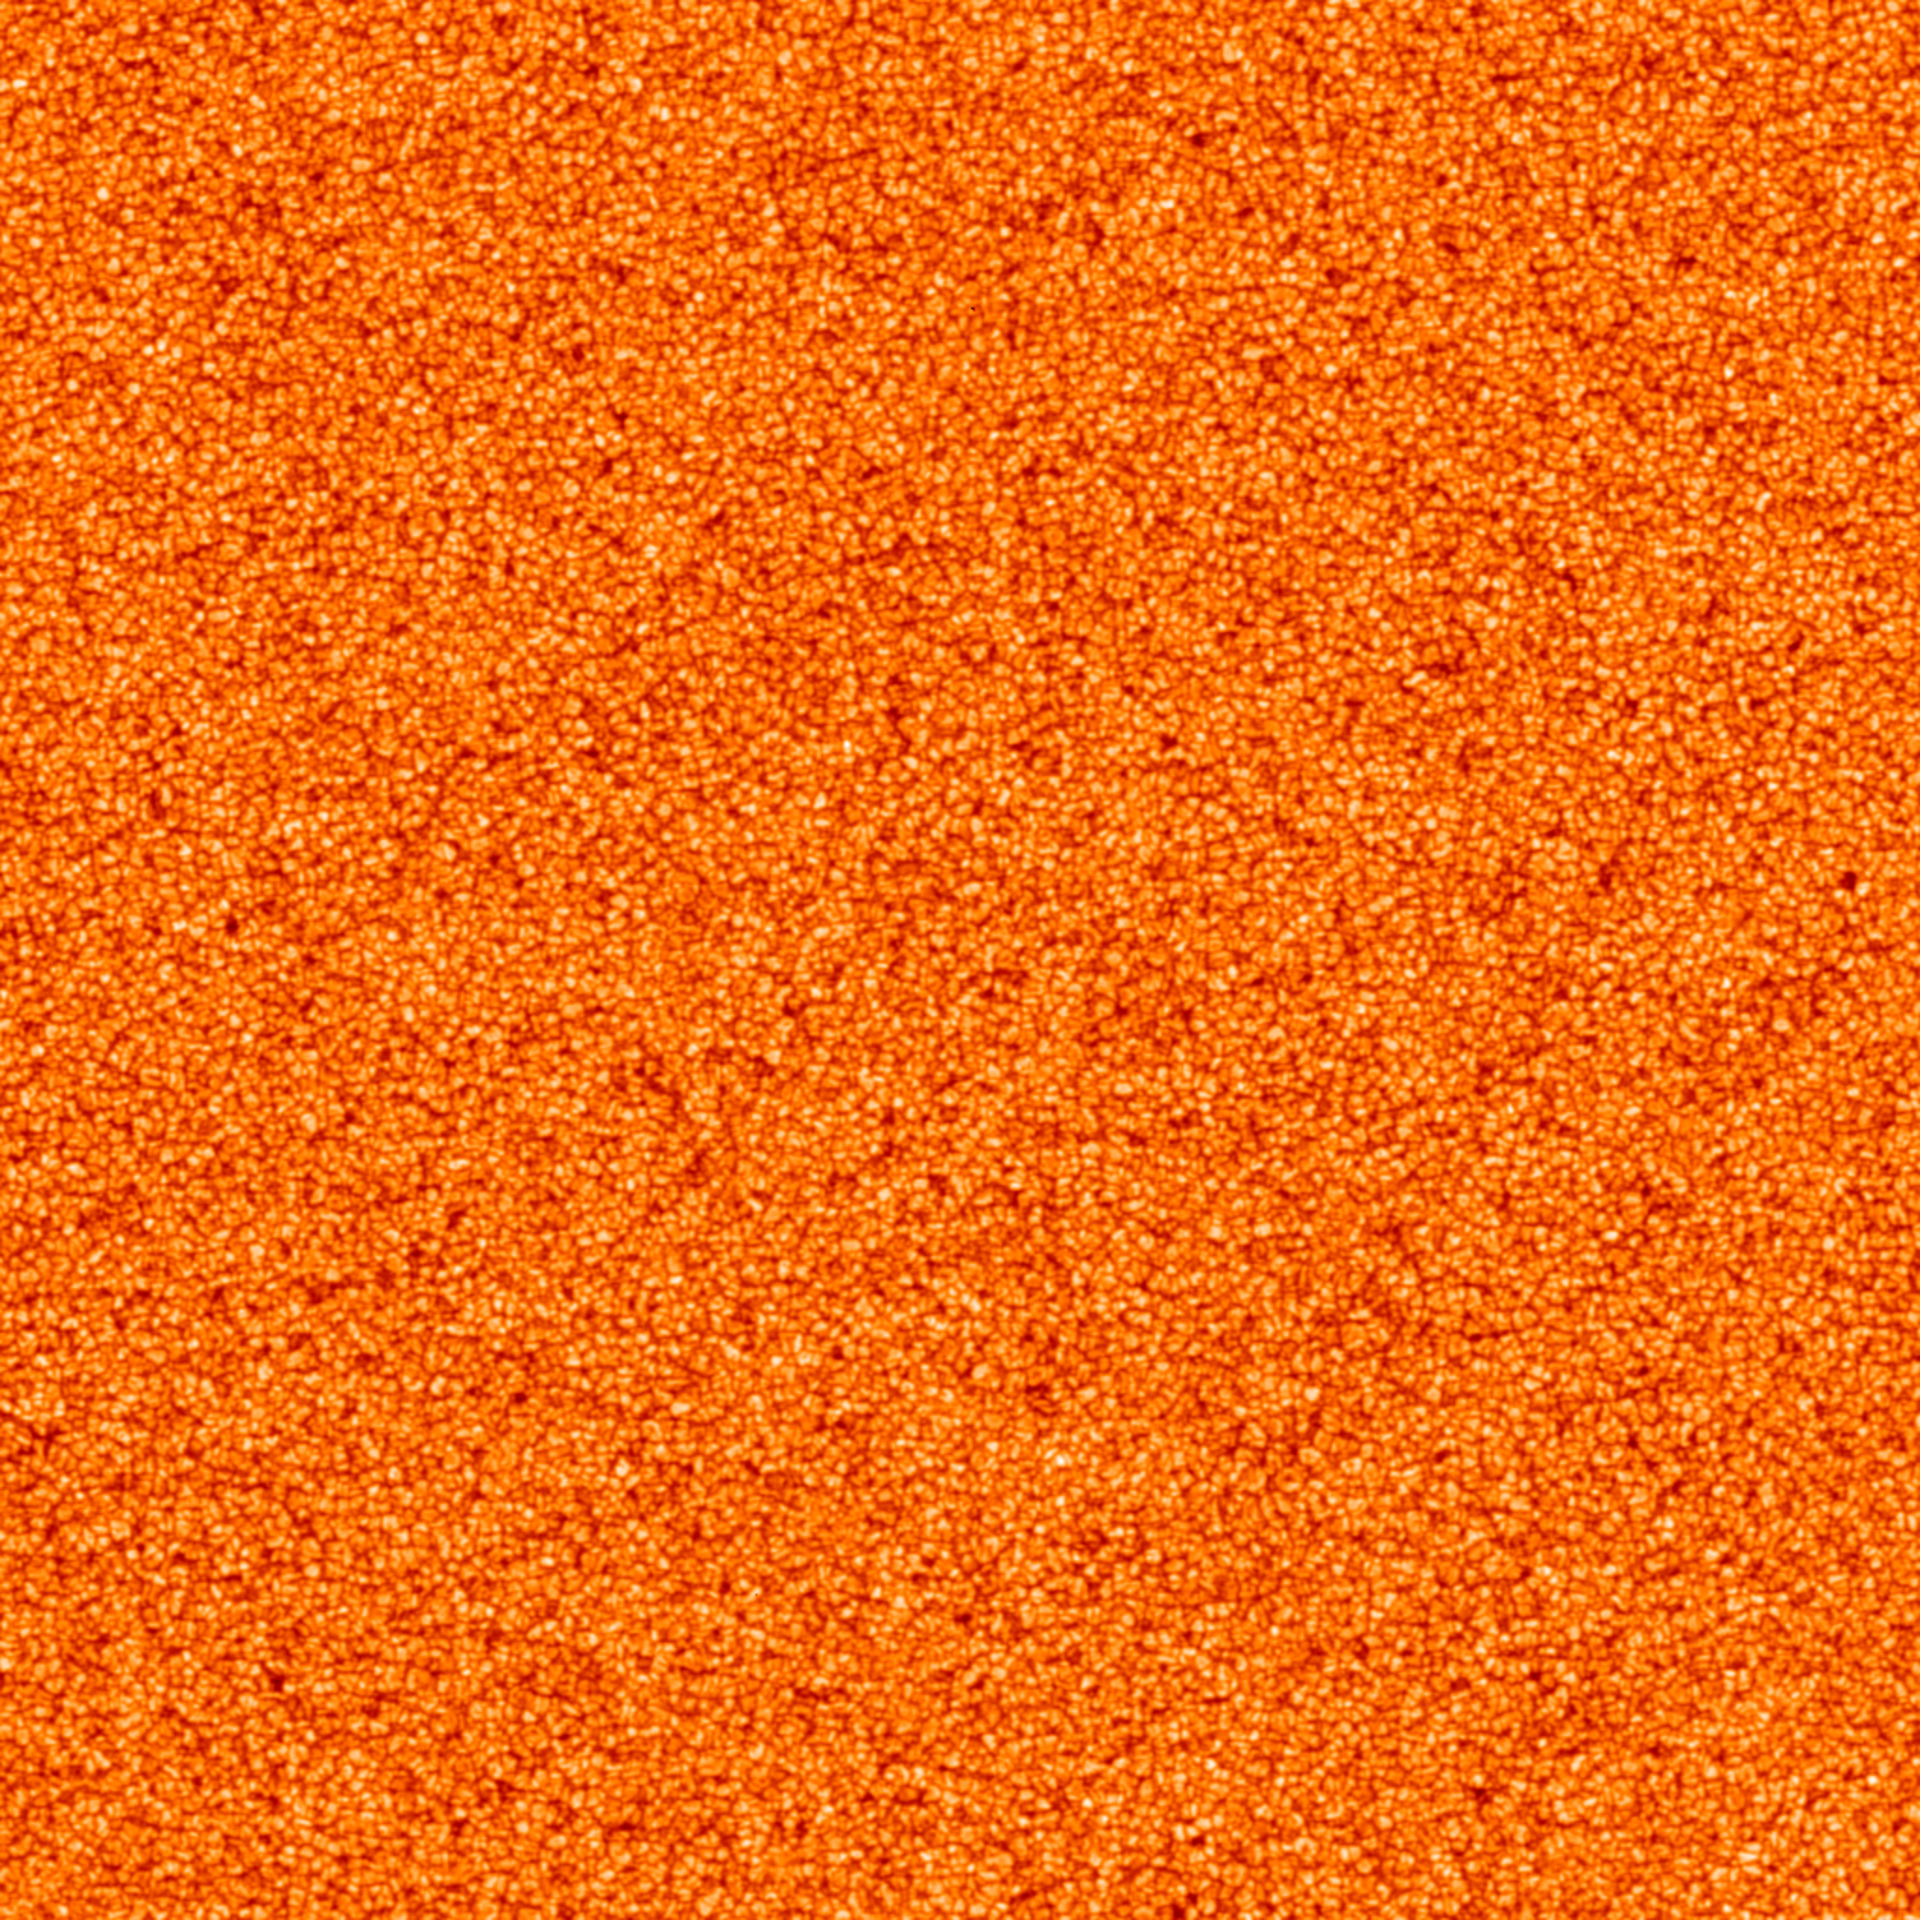 The Sun’s granulation pattern viewed by Solar Orbiter